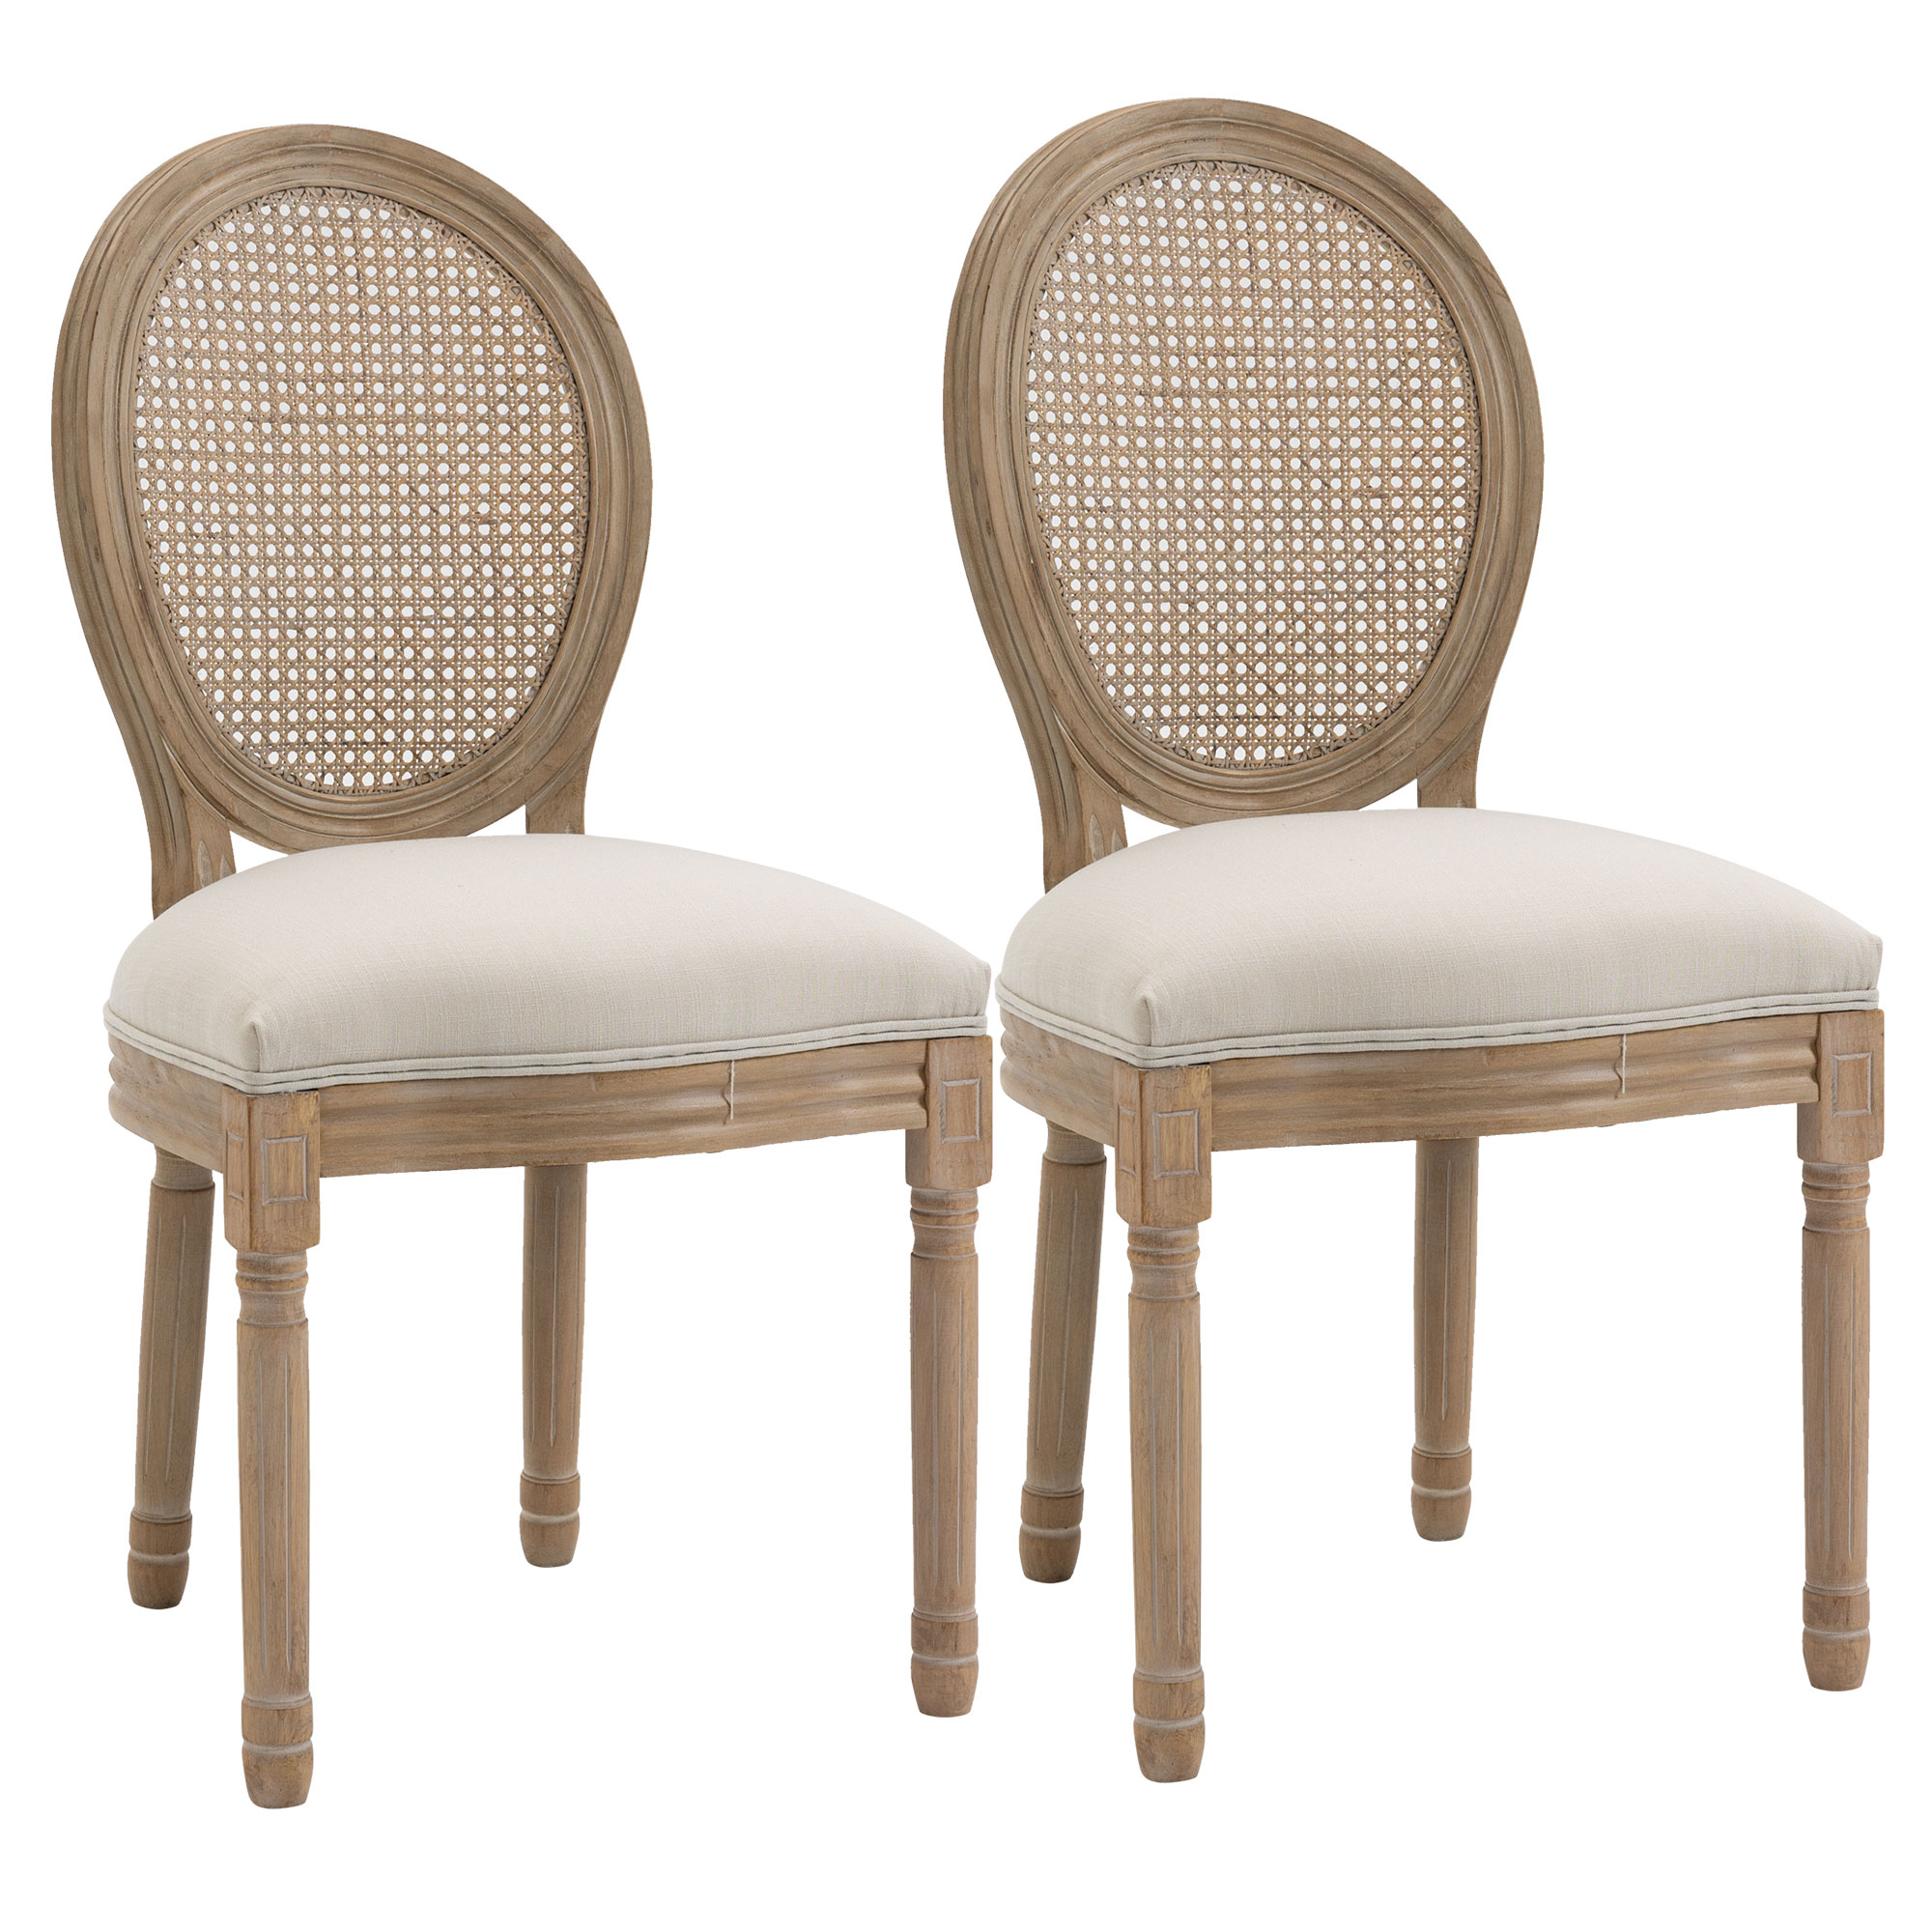 HOMCOM Σετ 2 καρέκλες σαλονιού σε στυλ Vintage με διάτρητη πλάτη